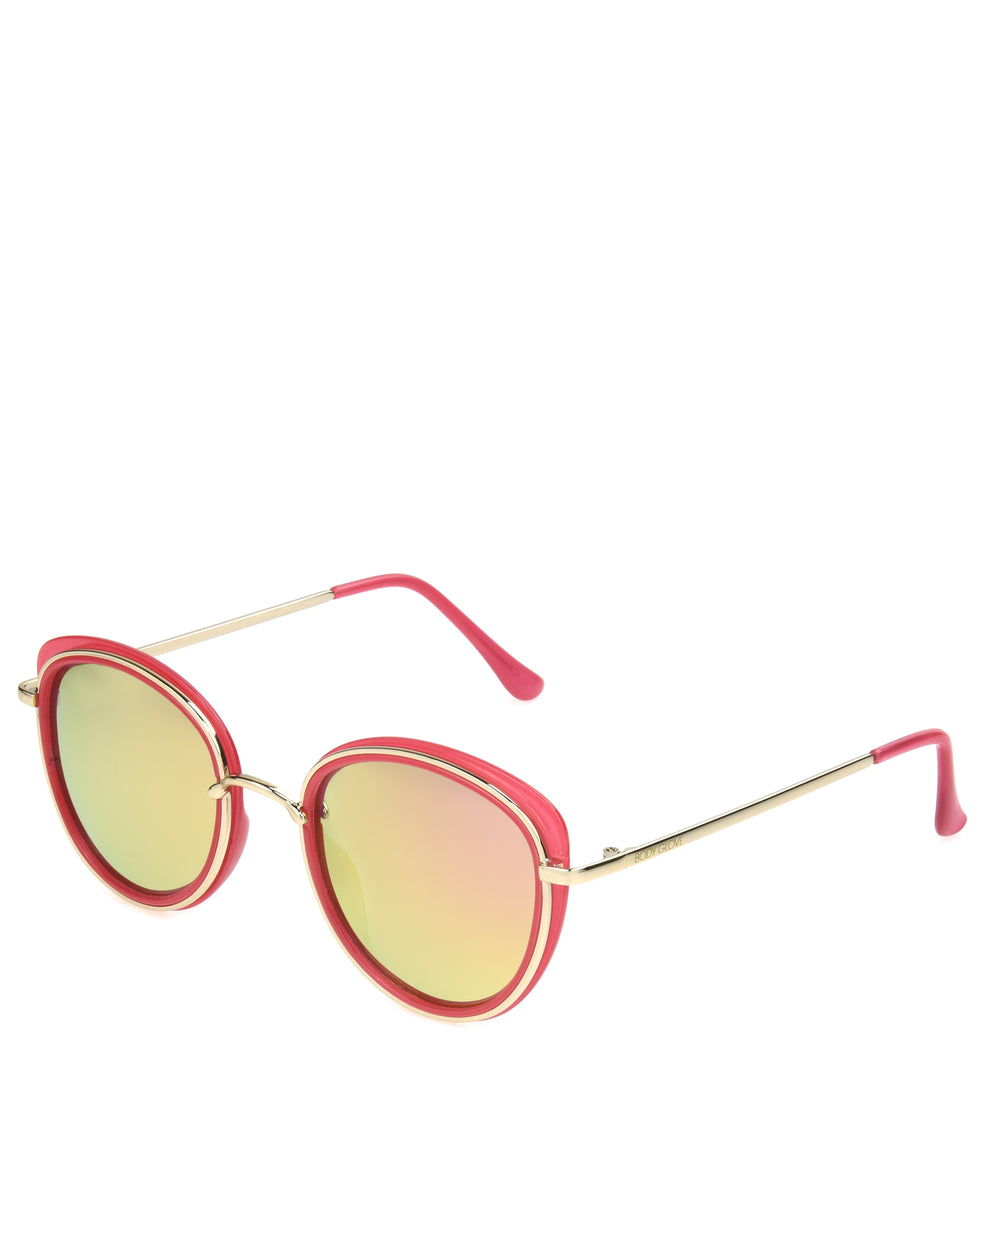 Women's BGL1919 Polarized Sunglasses - Gold/Pink